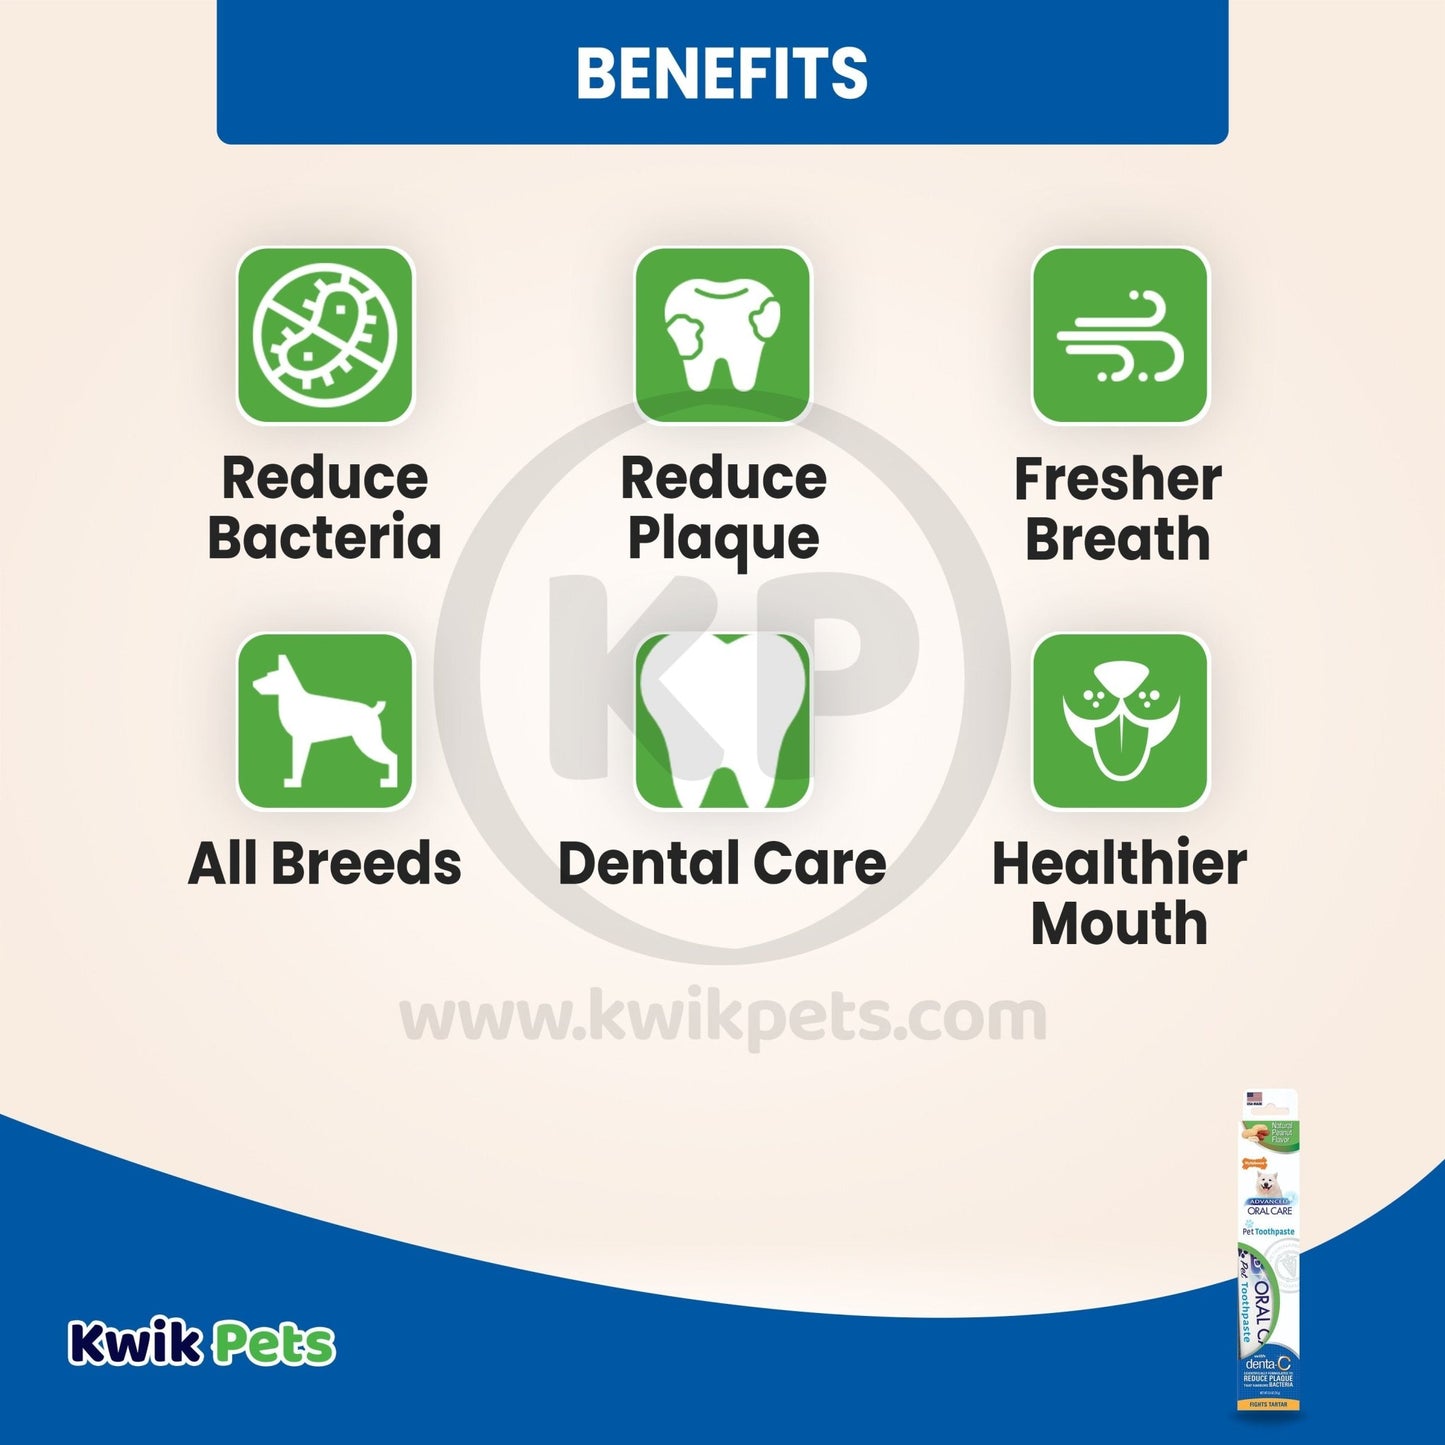 Nylabone Advanced Oral Care Natural Toothpaste Peanut Flavor, 2.5 oz - Kwik Pets